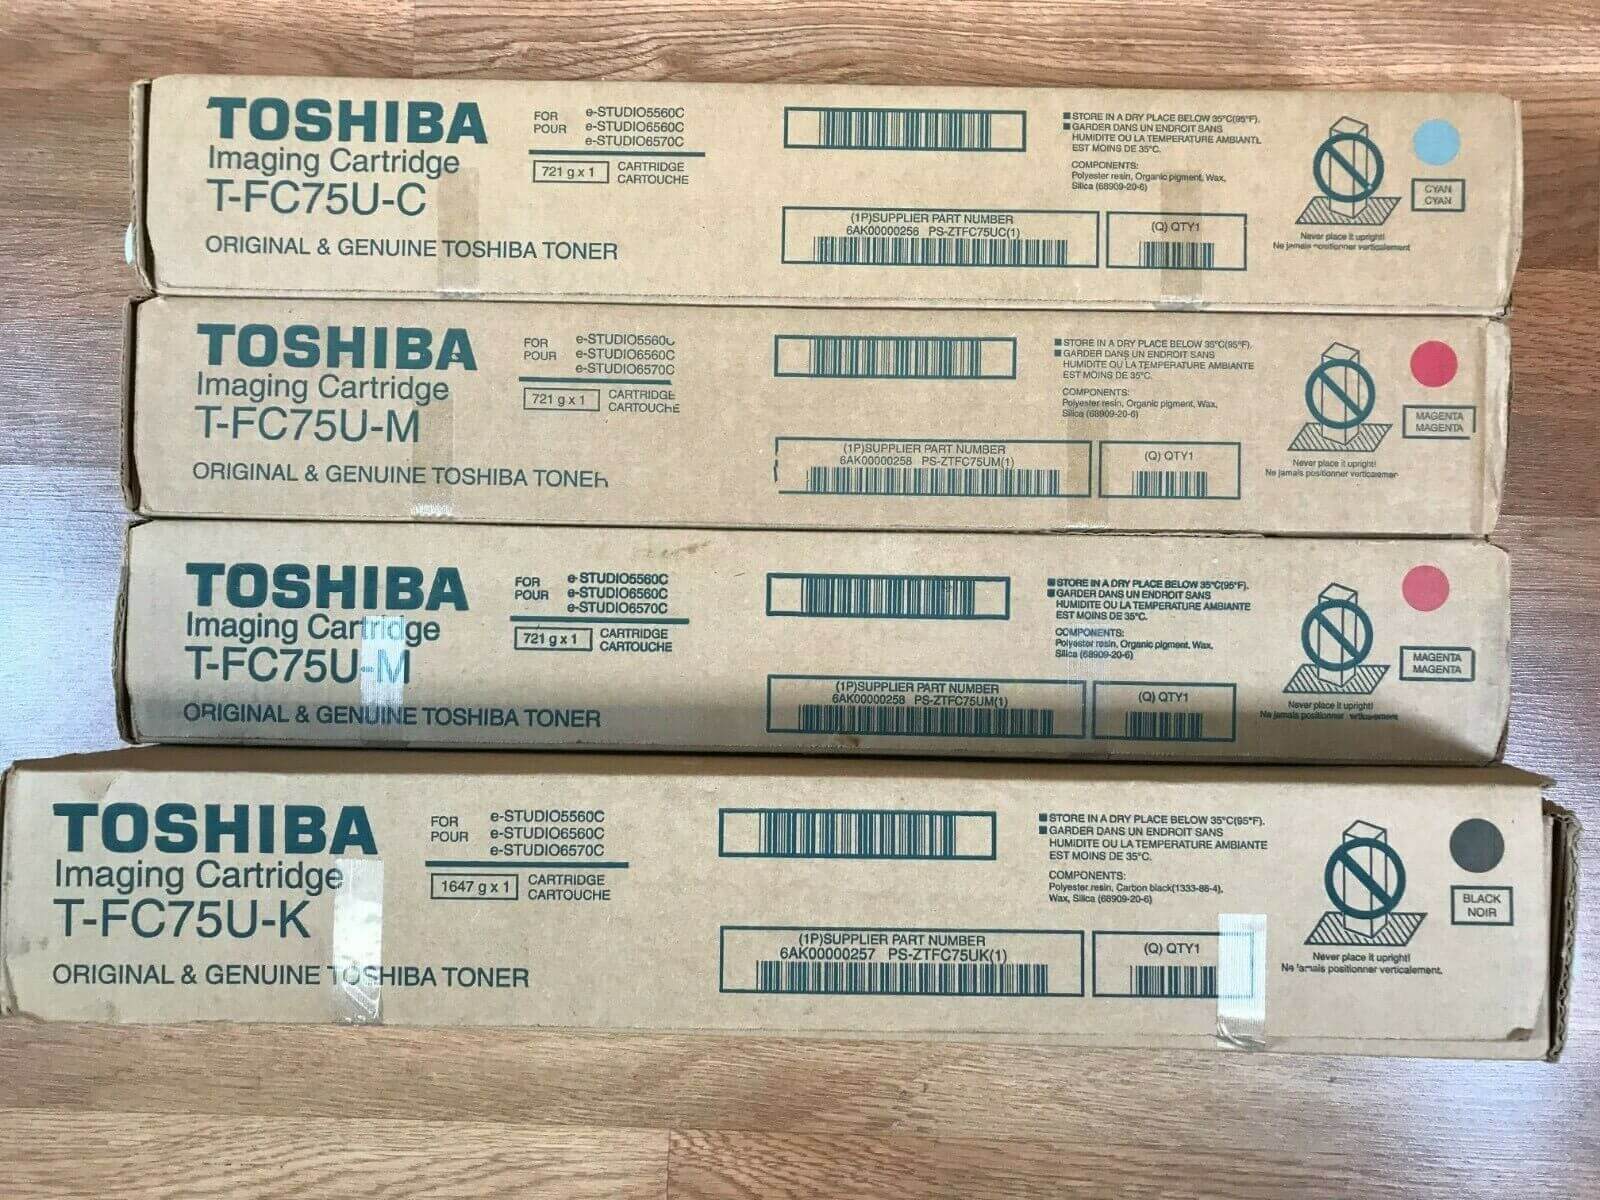 4 Genuine Toshiba T-FC75U (C,M,M,K) Imaging Cartridges For e-STUDIO 5560C/ 6560C - copier-clearance-center